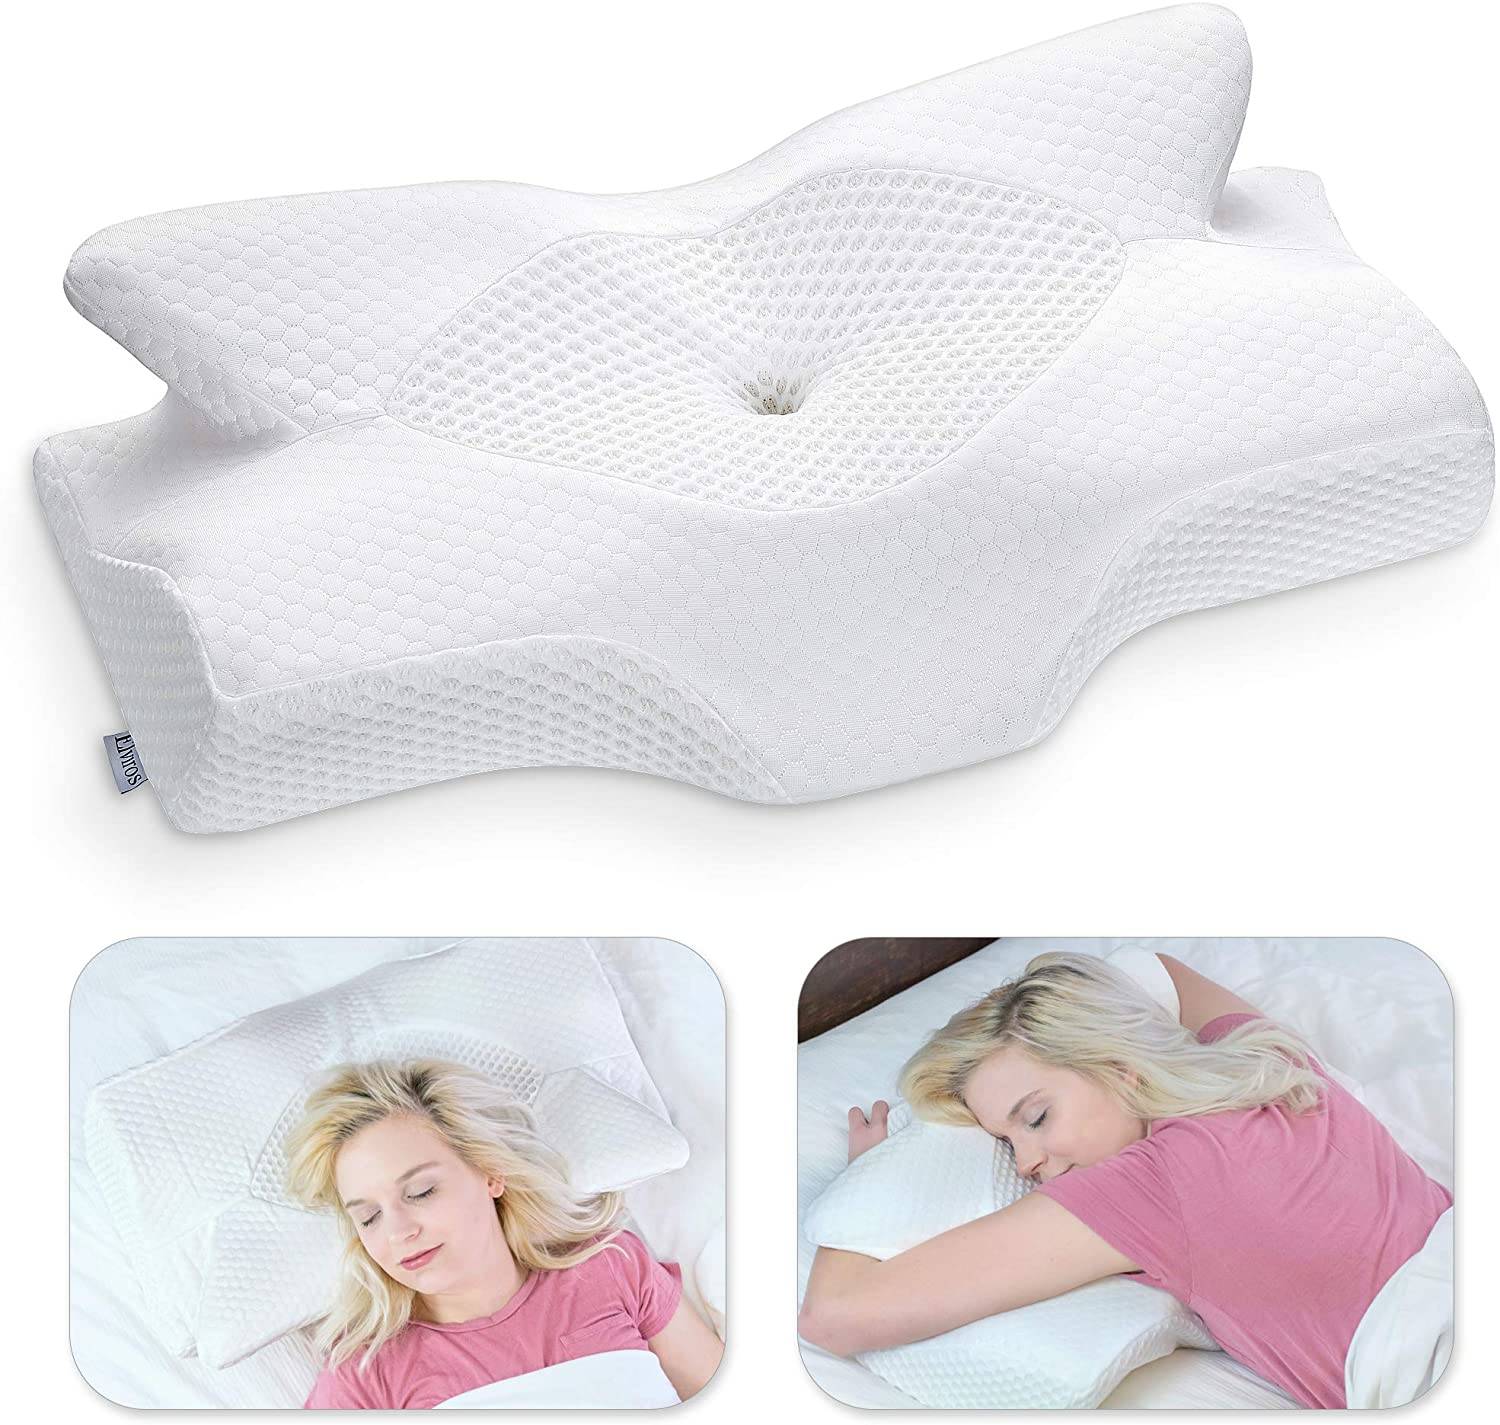 Best Cervical Pillow The Sleep Judge